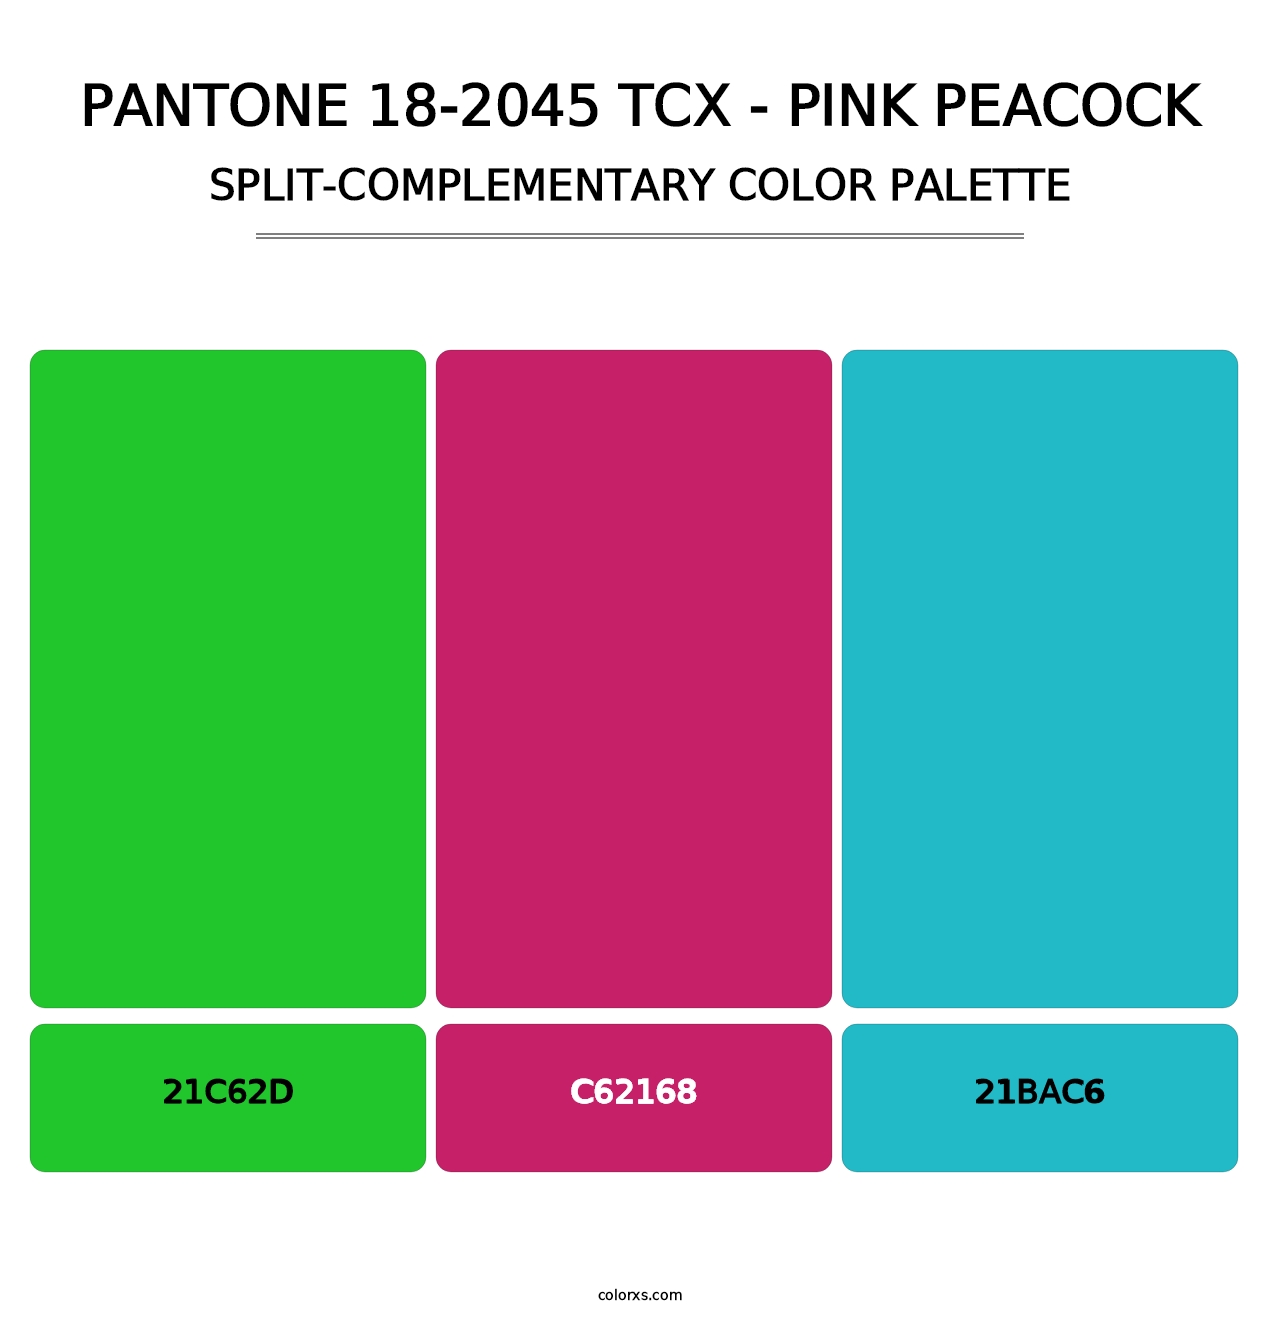 PANTONE 18-2045 TCX - Pink Peacock - Split-Complementary Color Palette